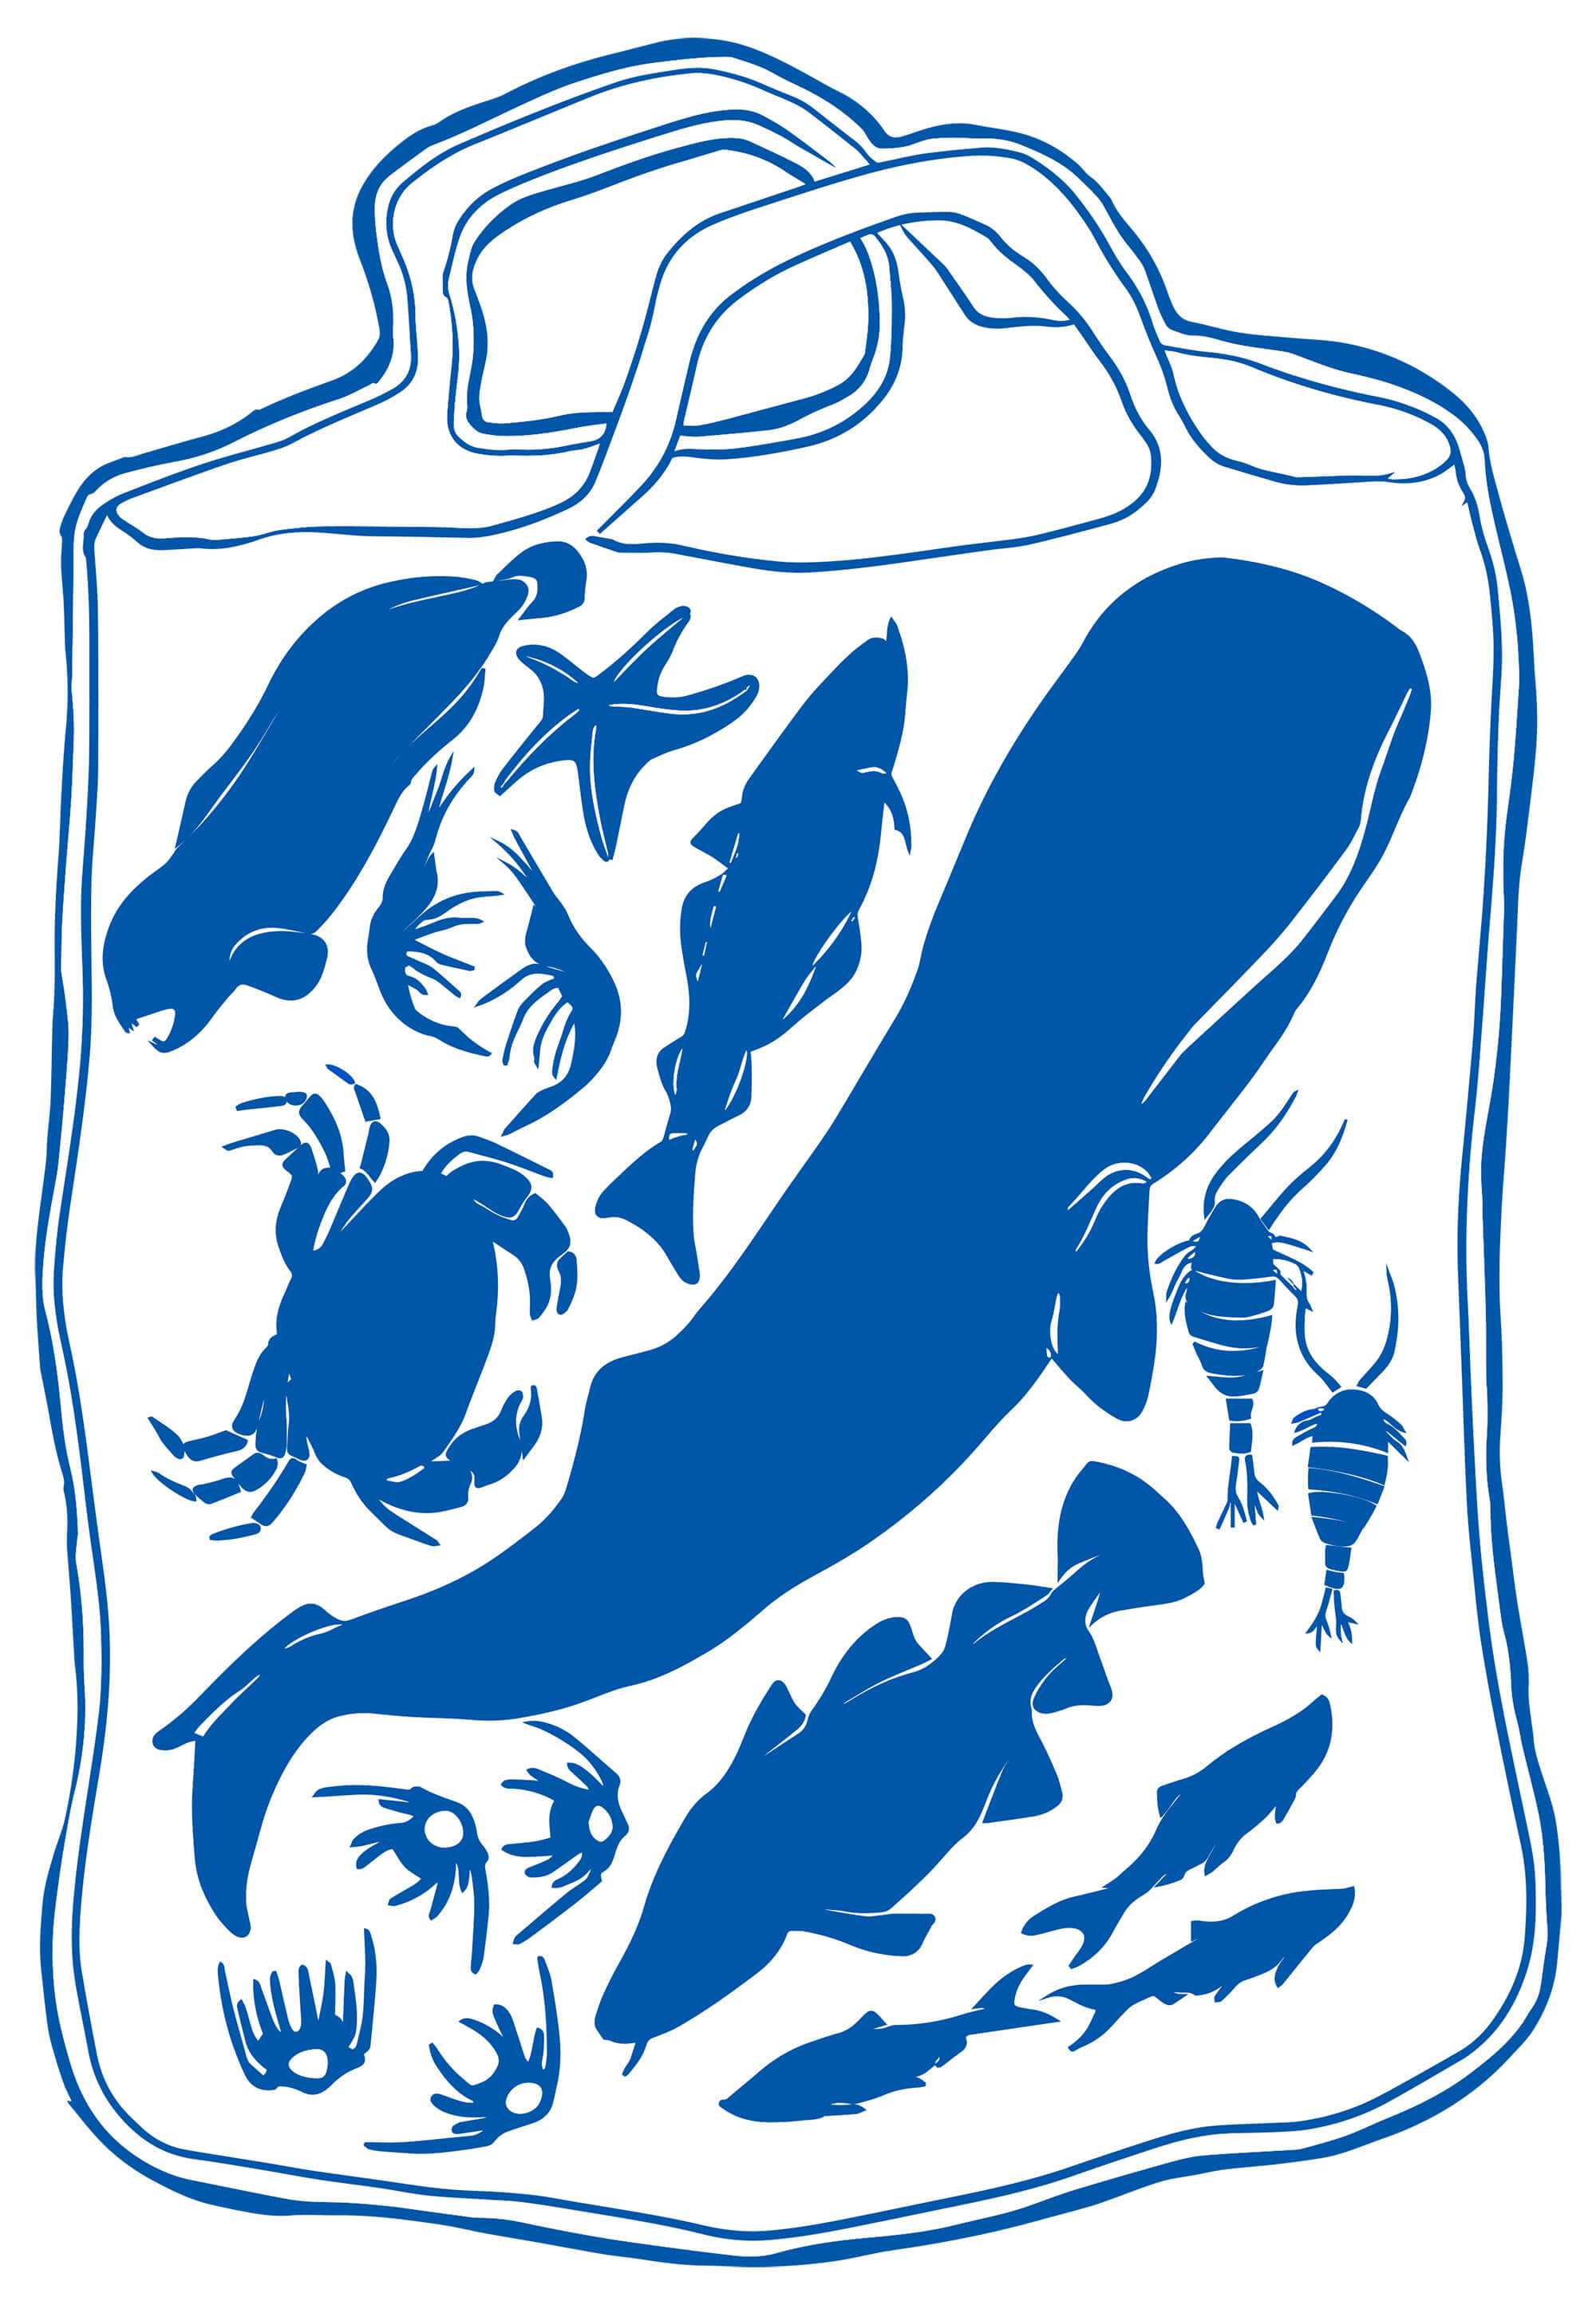 Illustrated plastic bag with sea animals inside